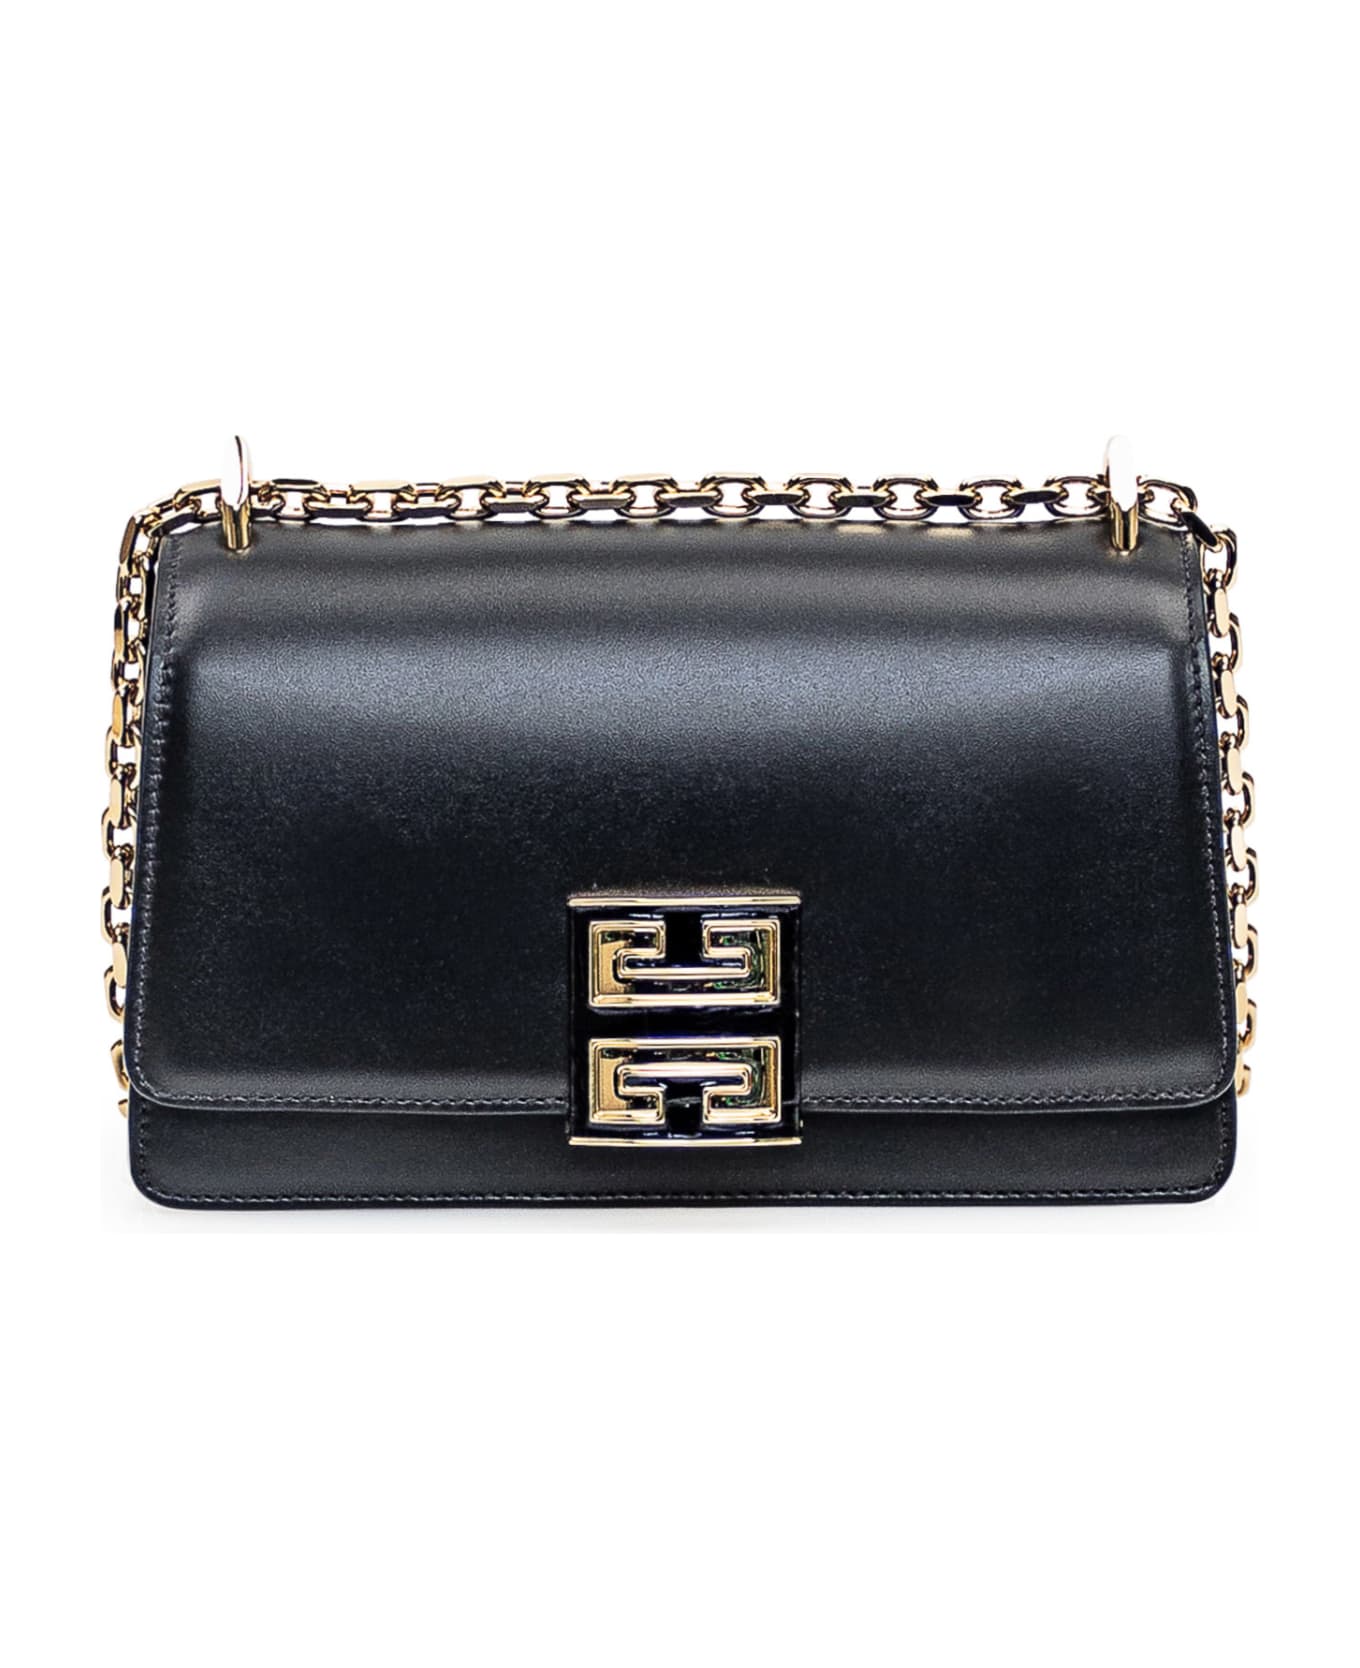 Givenchy Chain 4g Bag - Black